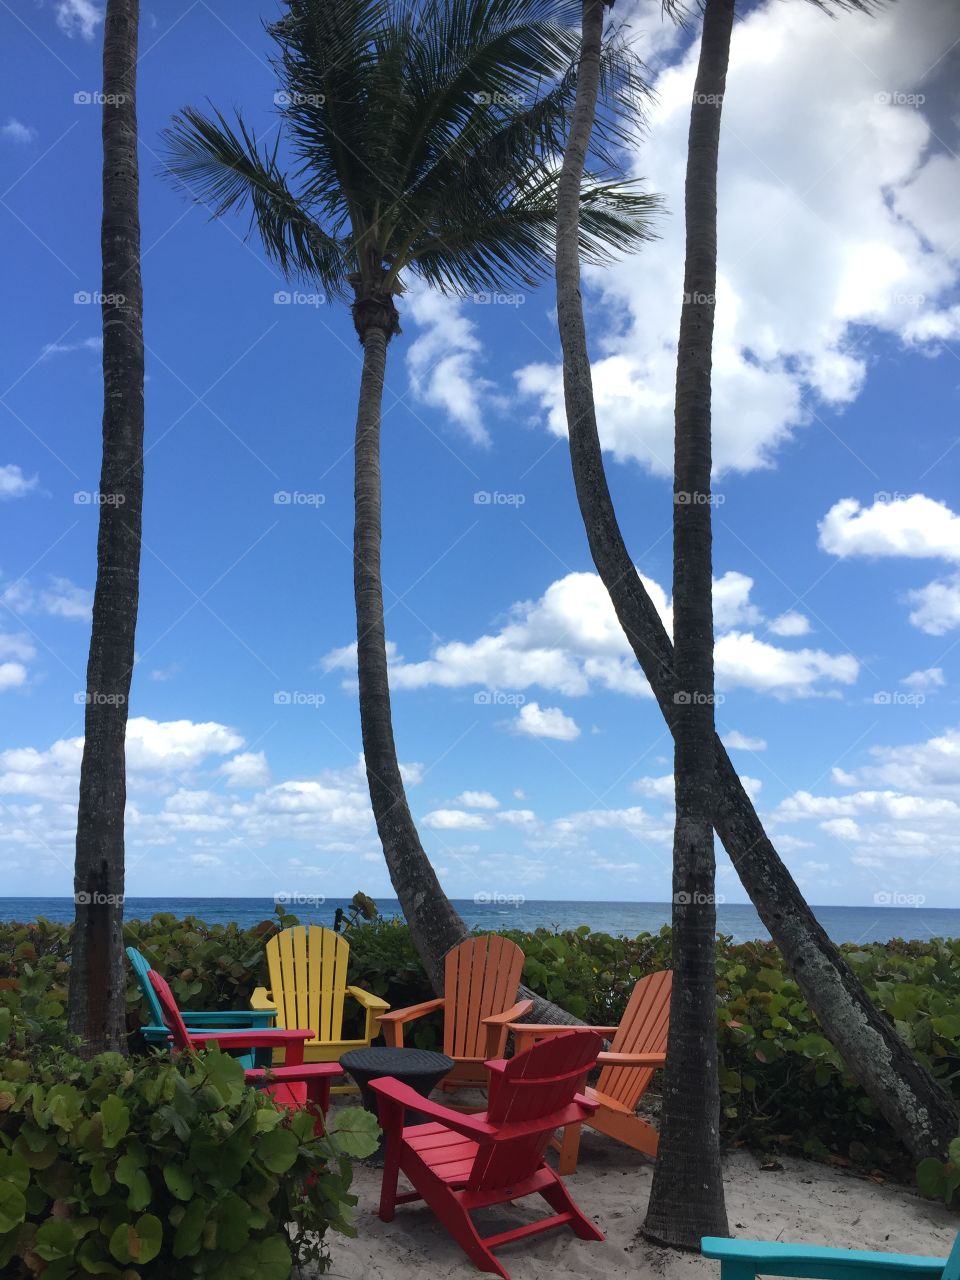 No Person, Summer, Beach, Chair, Relaxation